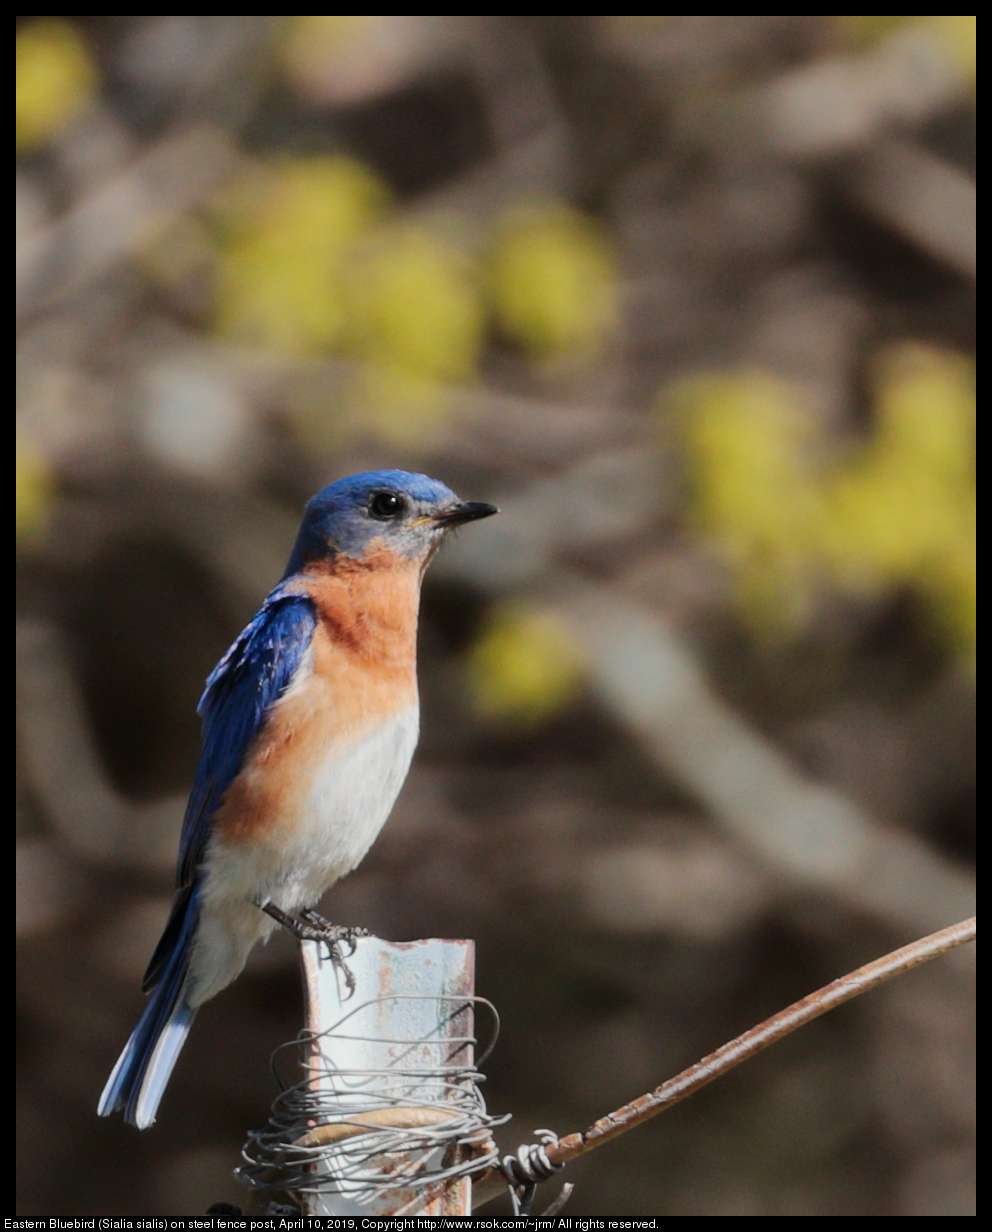 Eastern Bluebird (Sialia sialis) on steel fence post, April 10, 2019